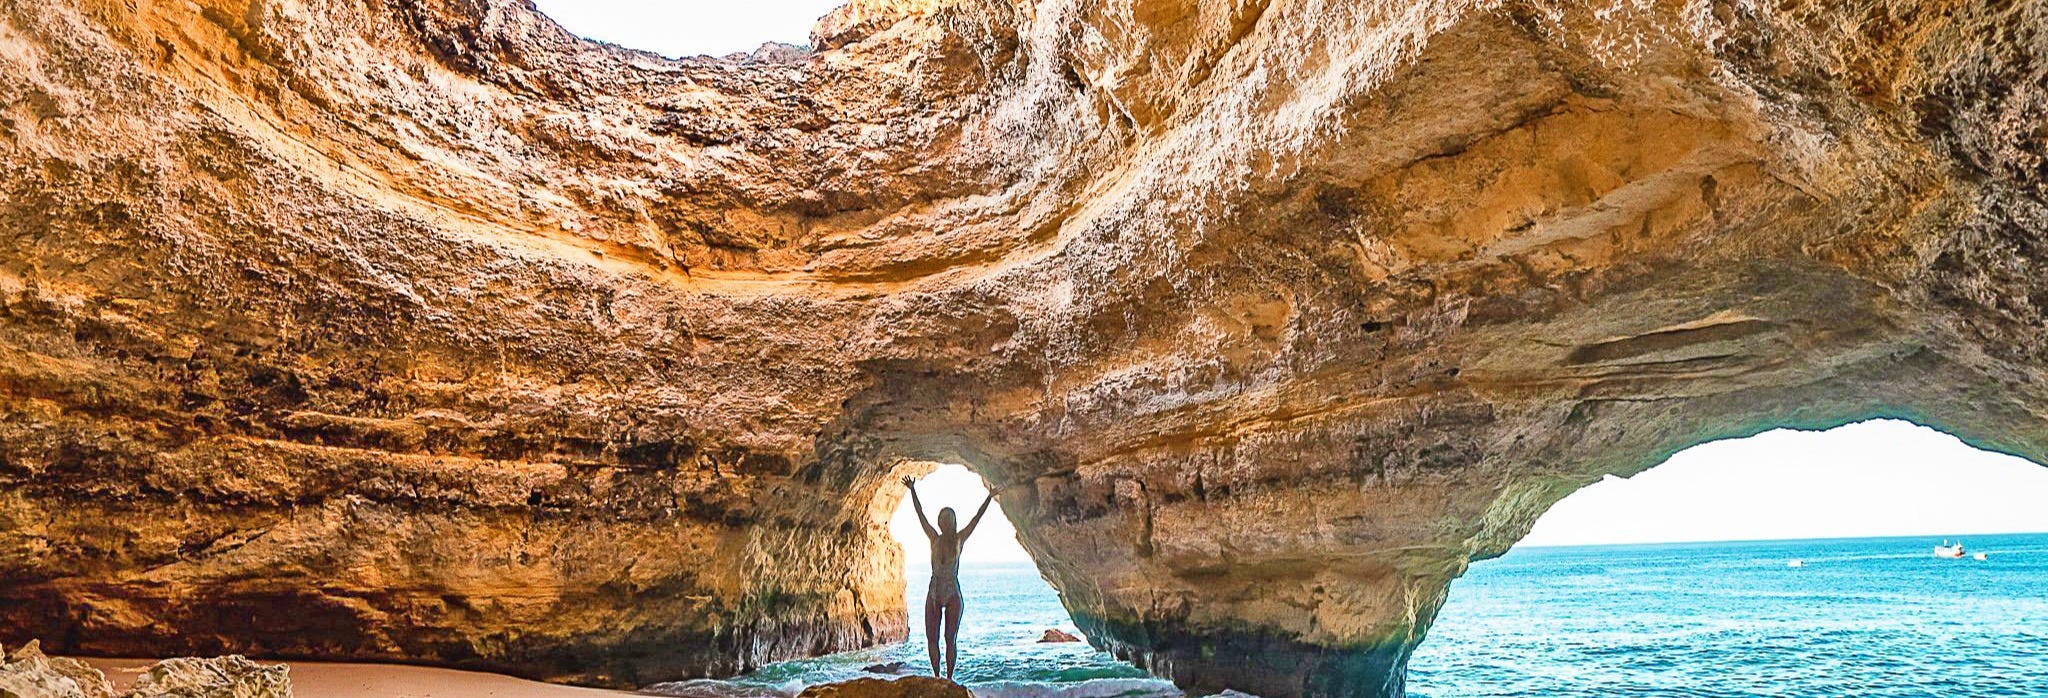 Benagil Caves & Ría de Alvor Cruise